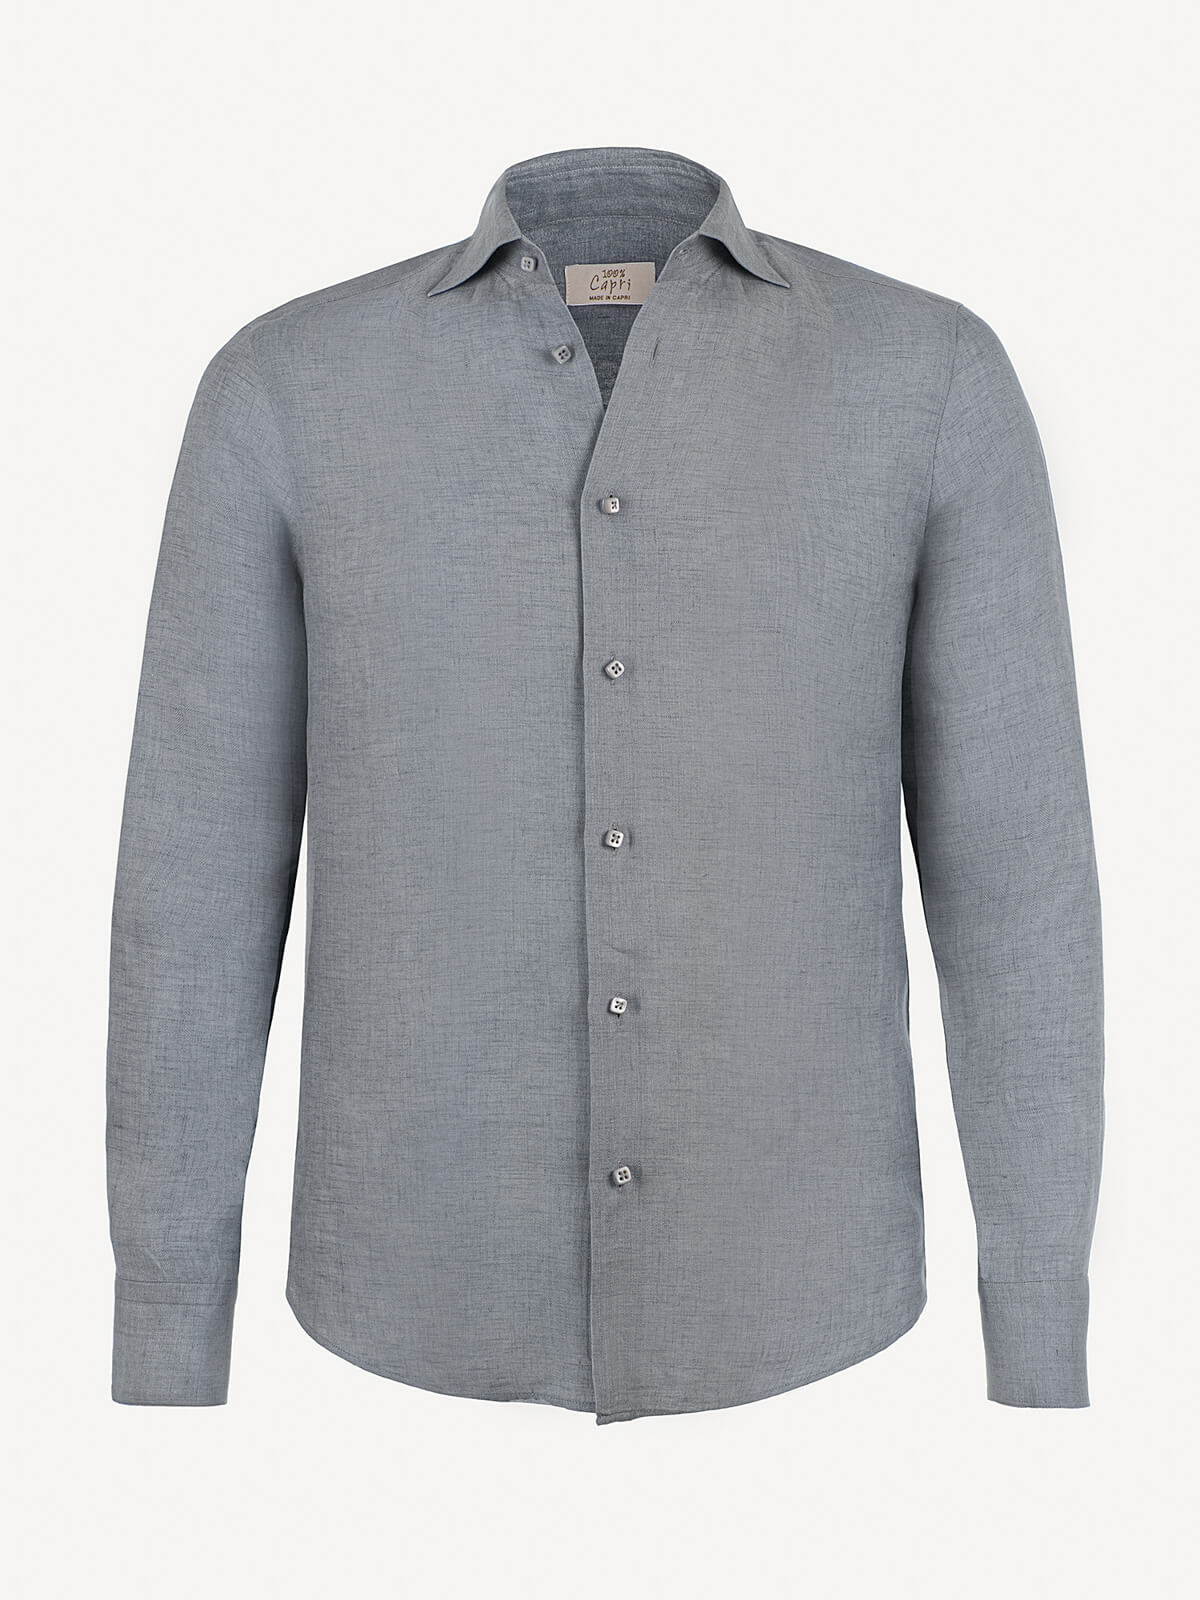 Camicia Hand Made front dark grey color 100% Capri